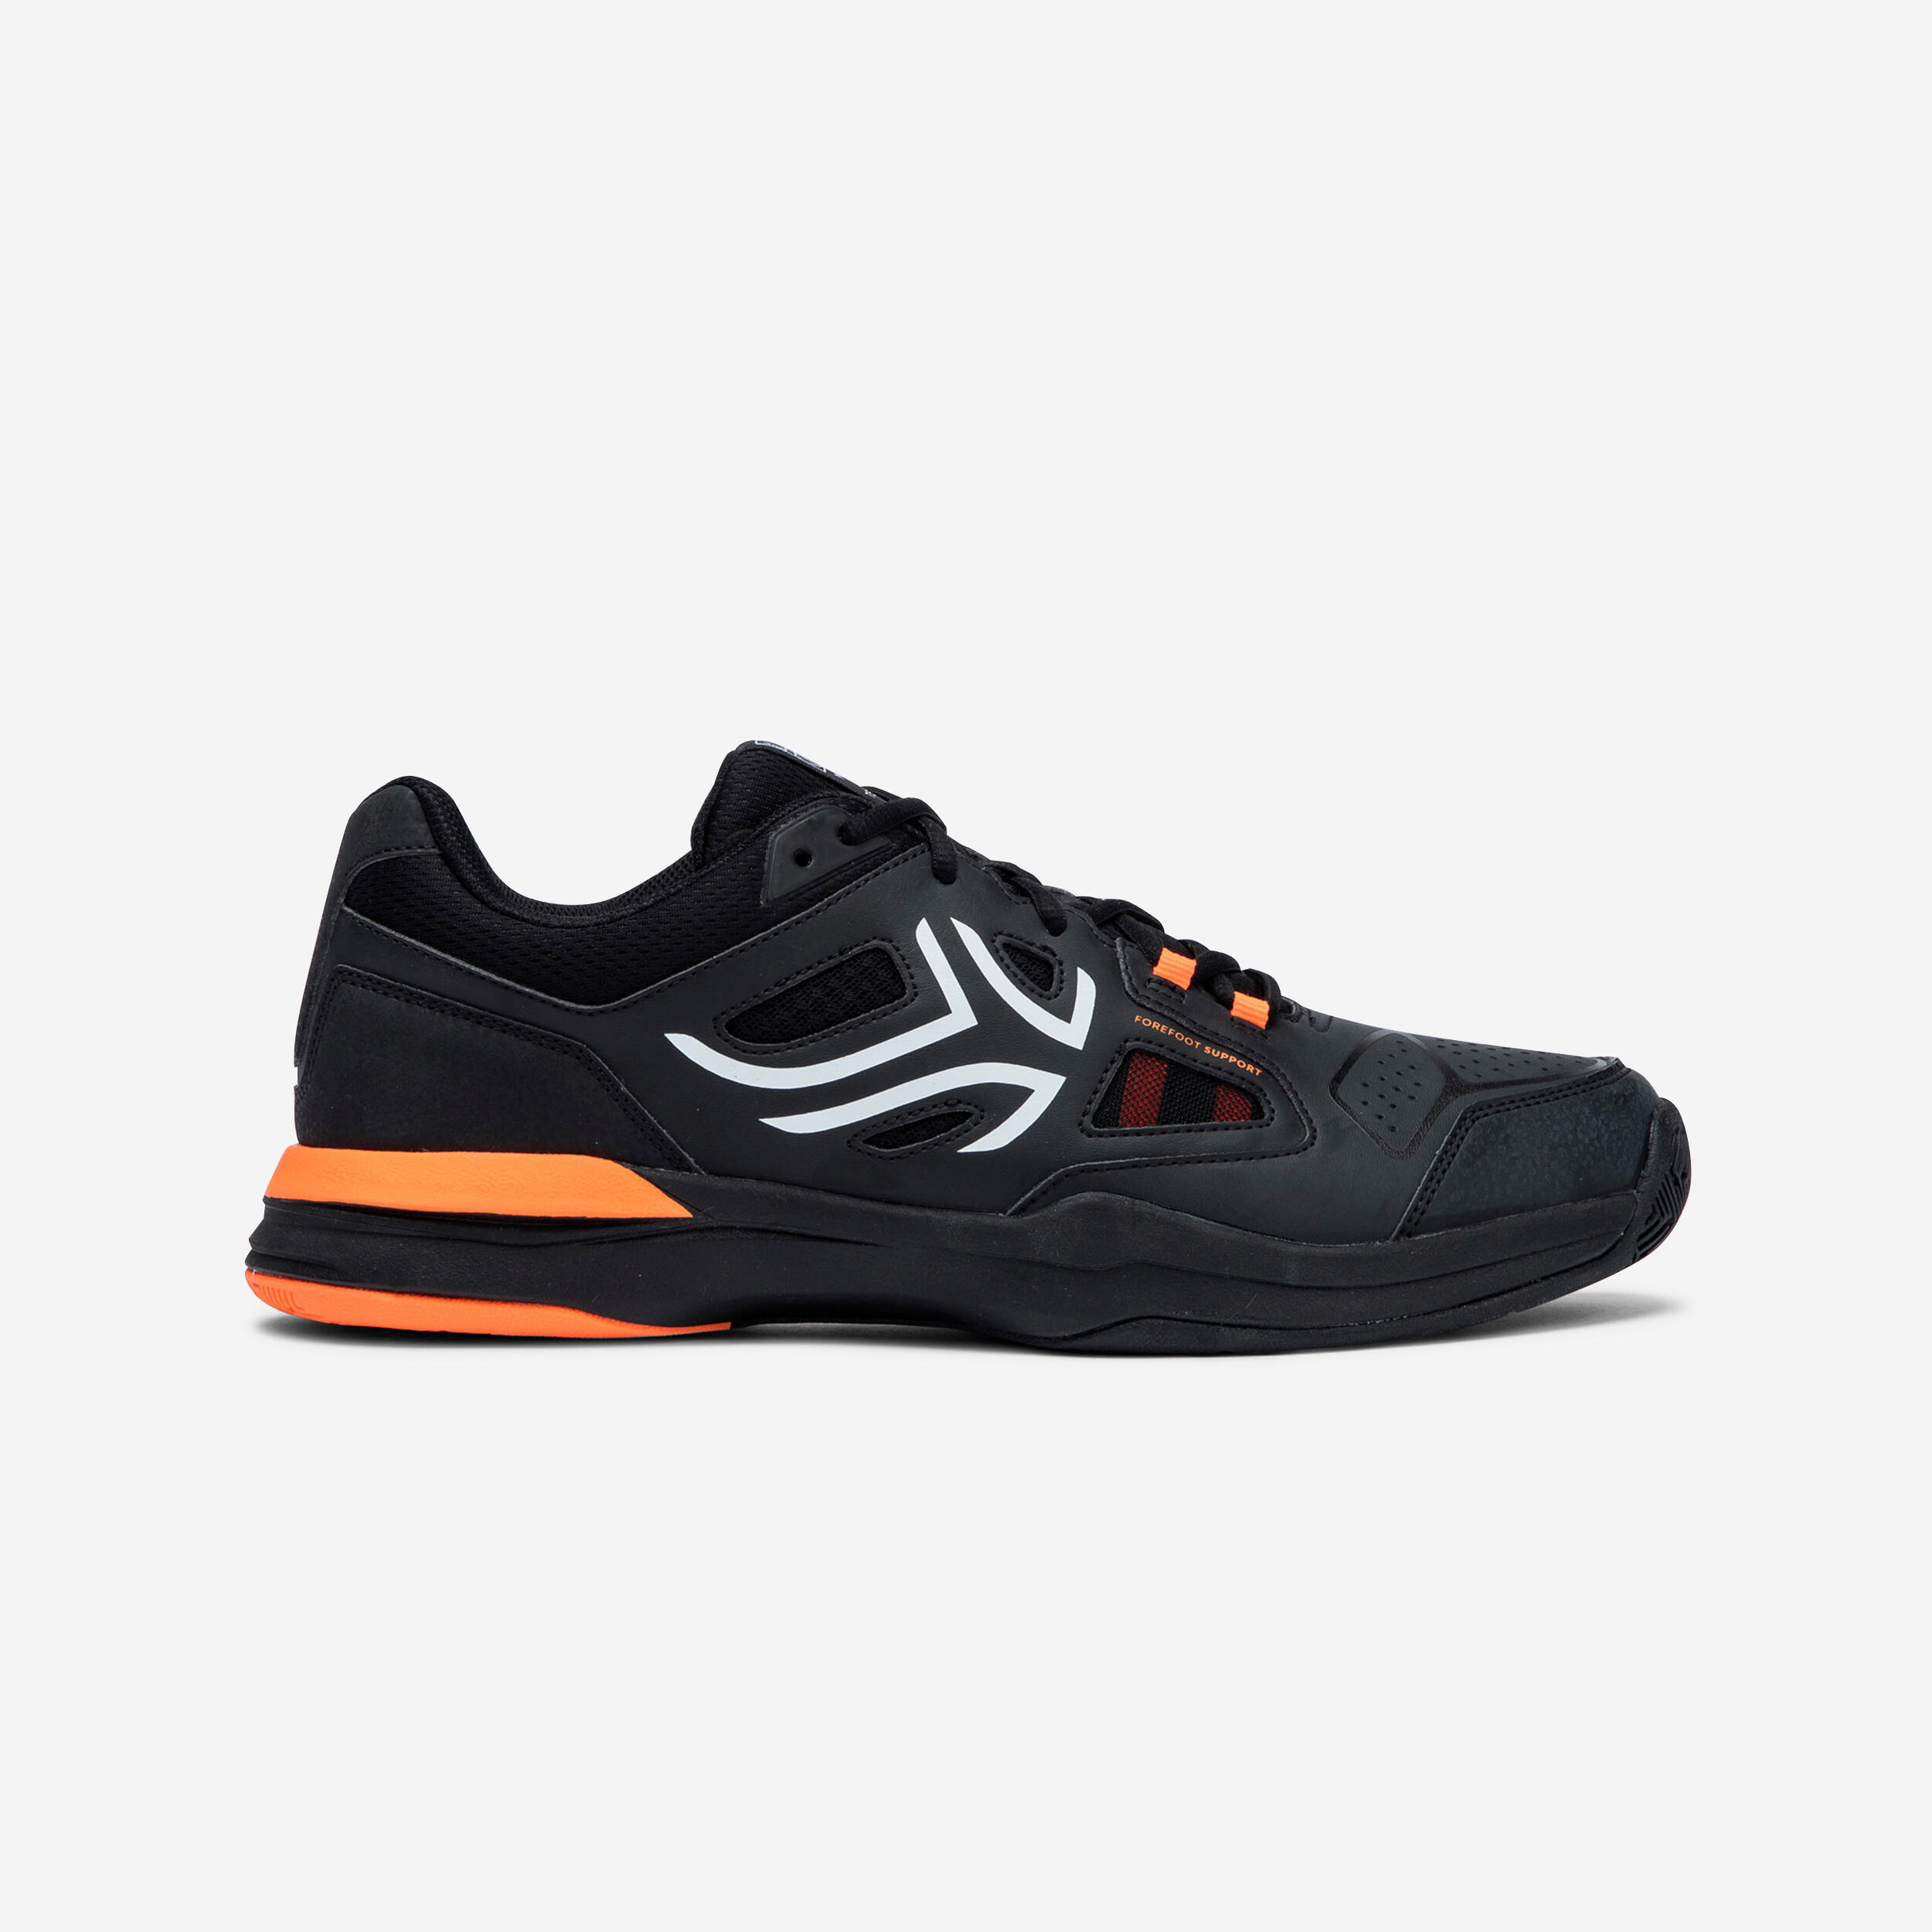 Image of Men's Multi-Court Tennis Shoes TS500 - Black/Orange